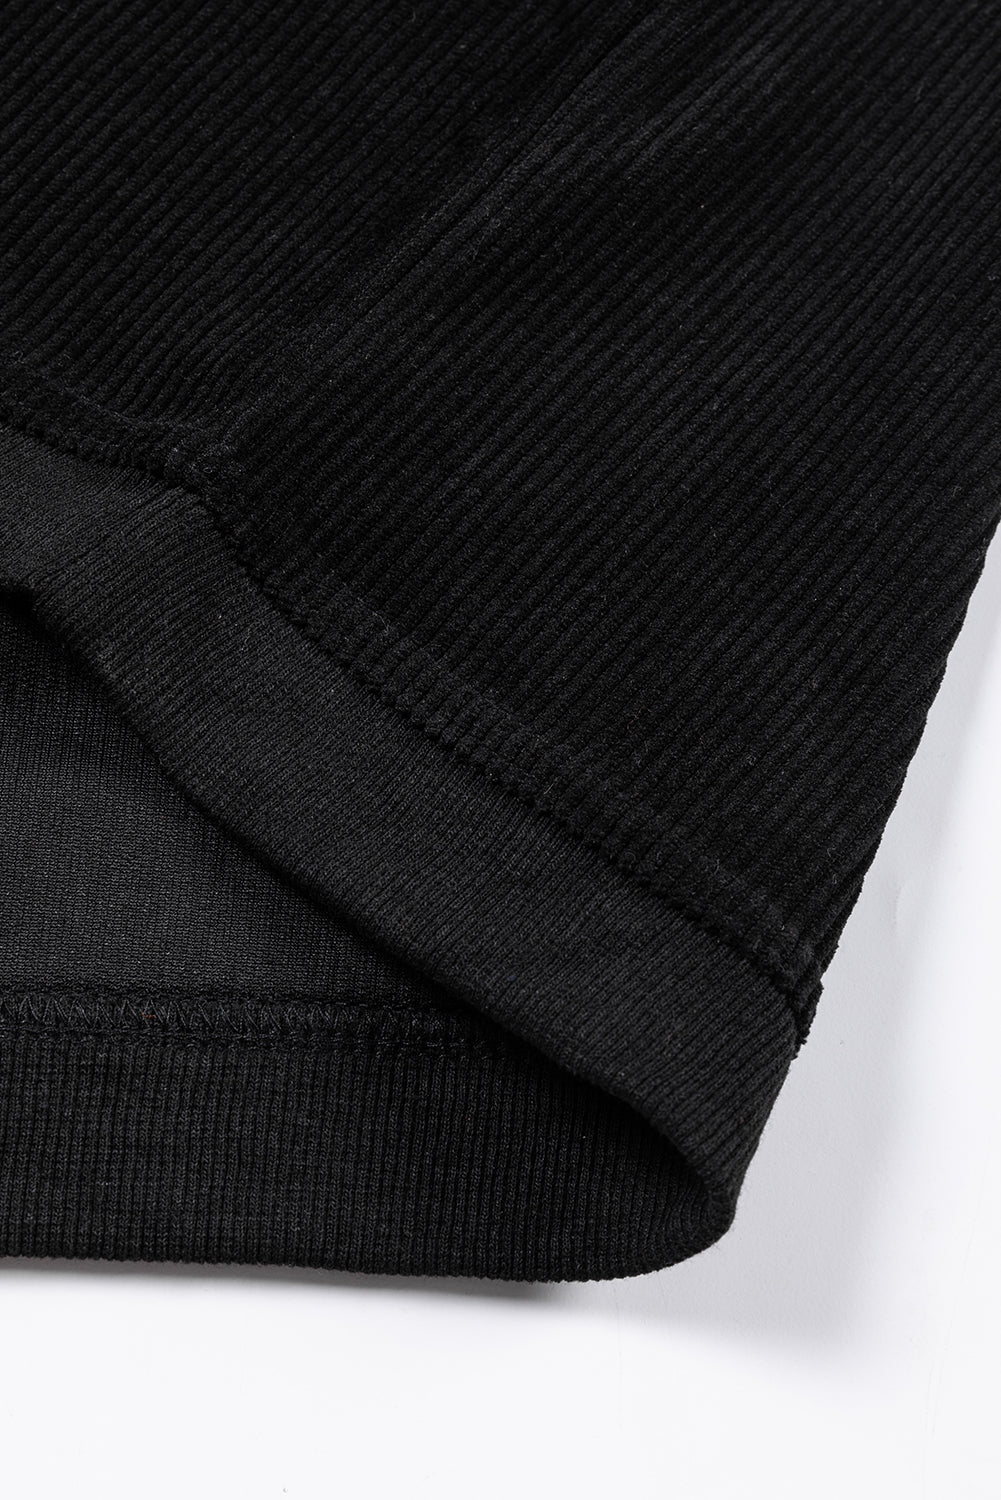 Black Ribbed Corded Oversized Sweatshirt